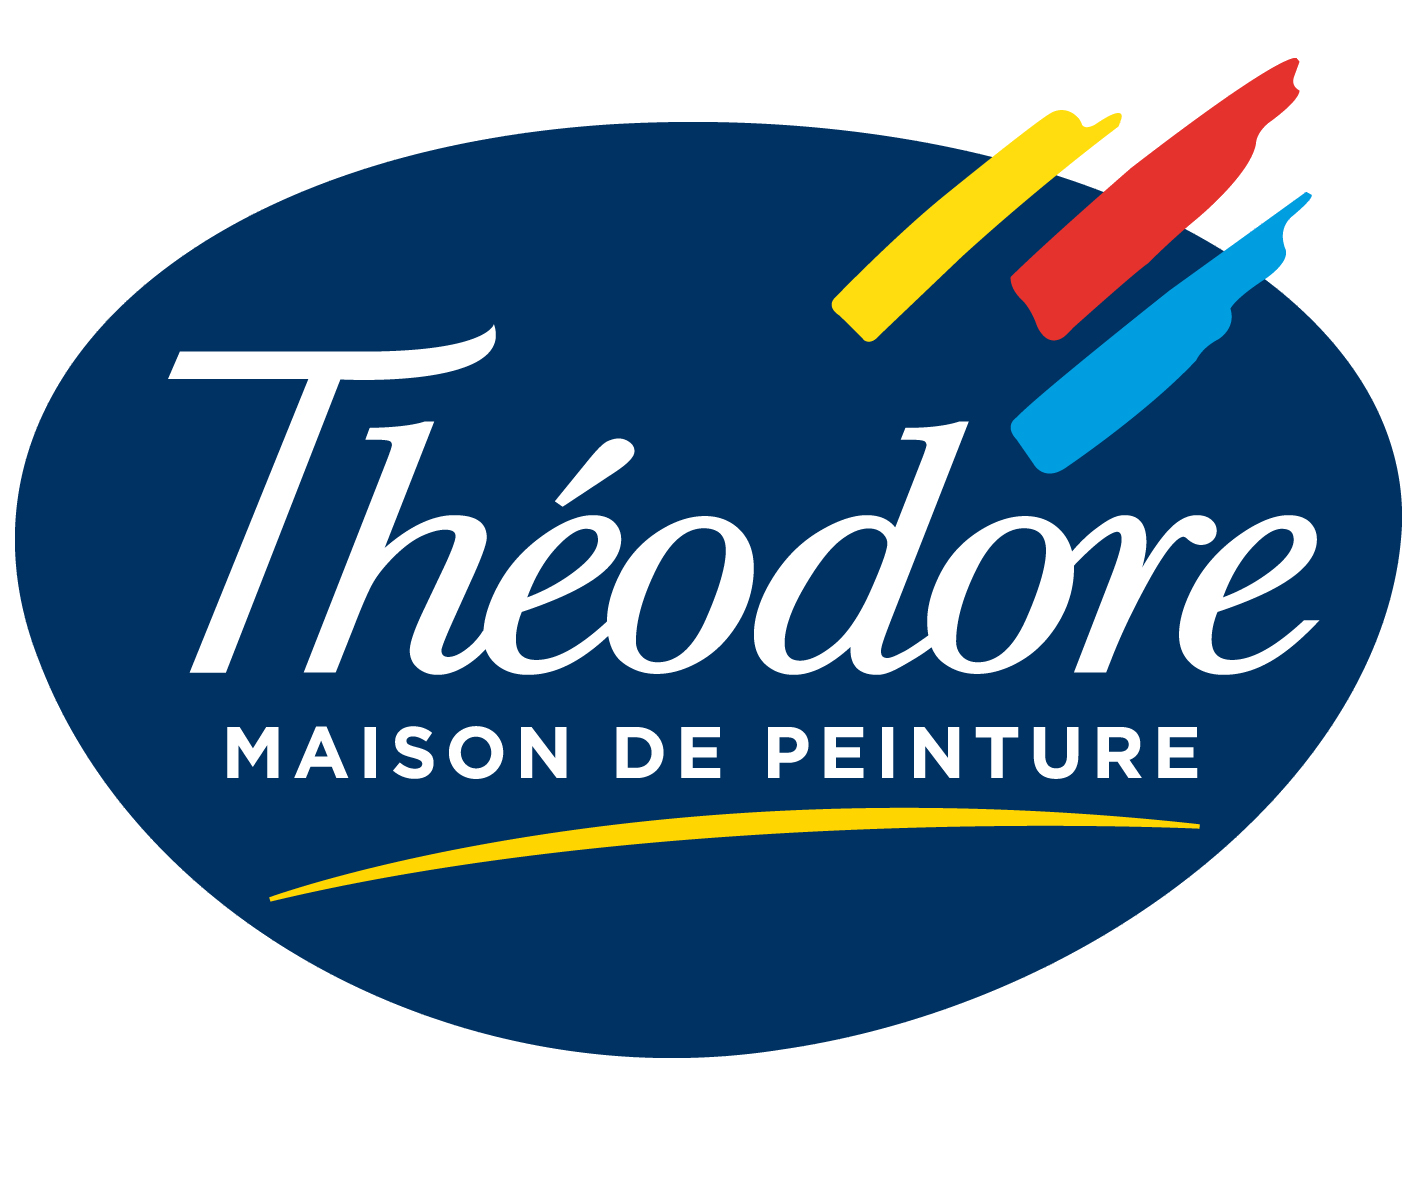 LOGO_THEODORE_Maison_de_peinture (1)